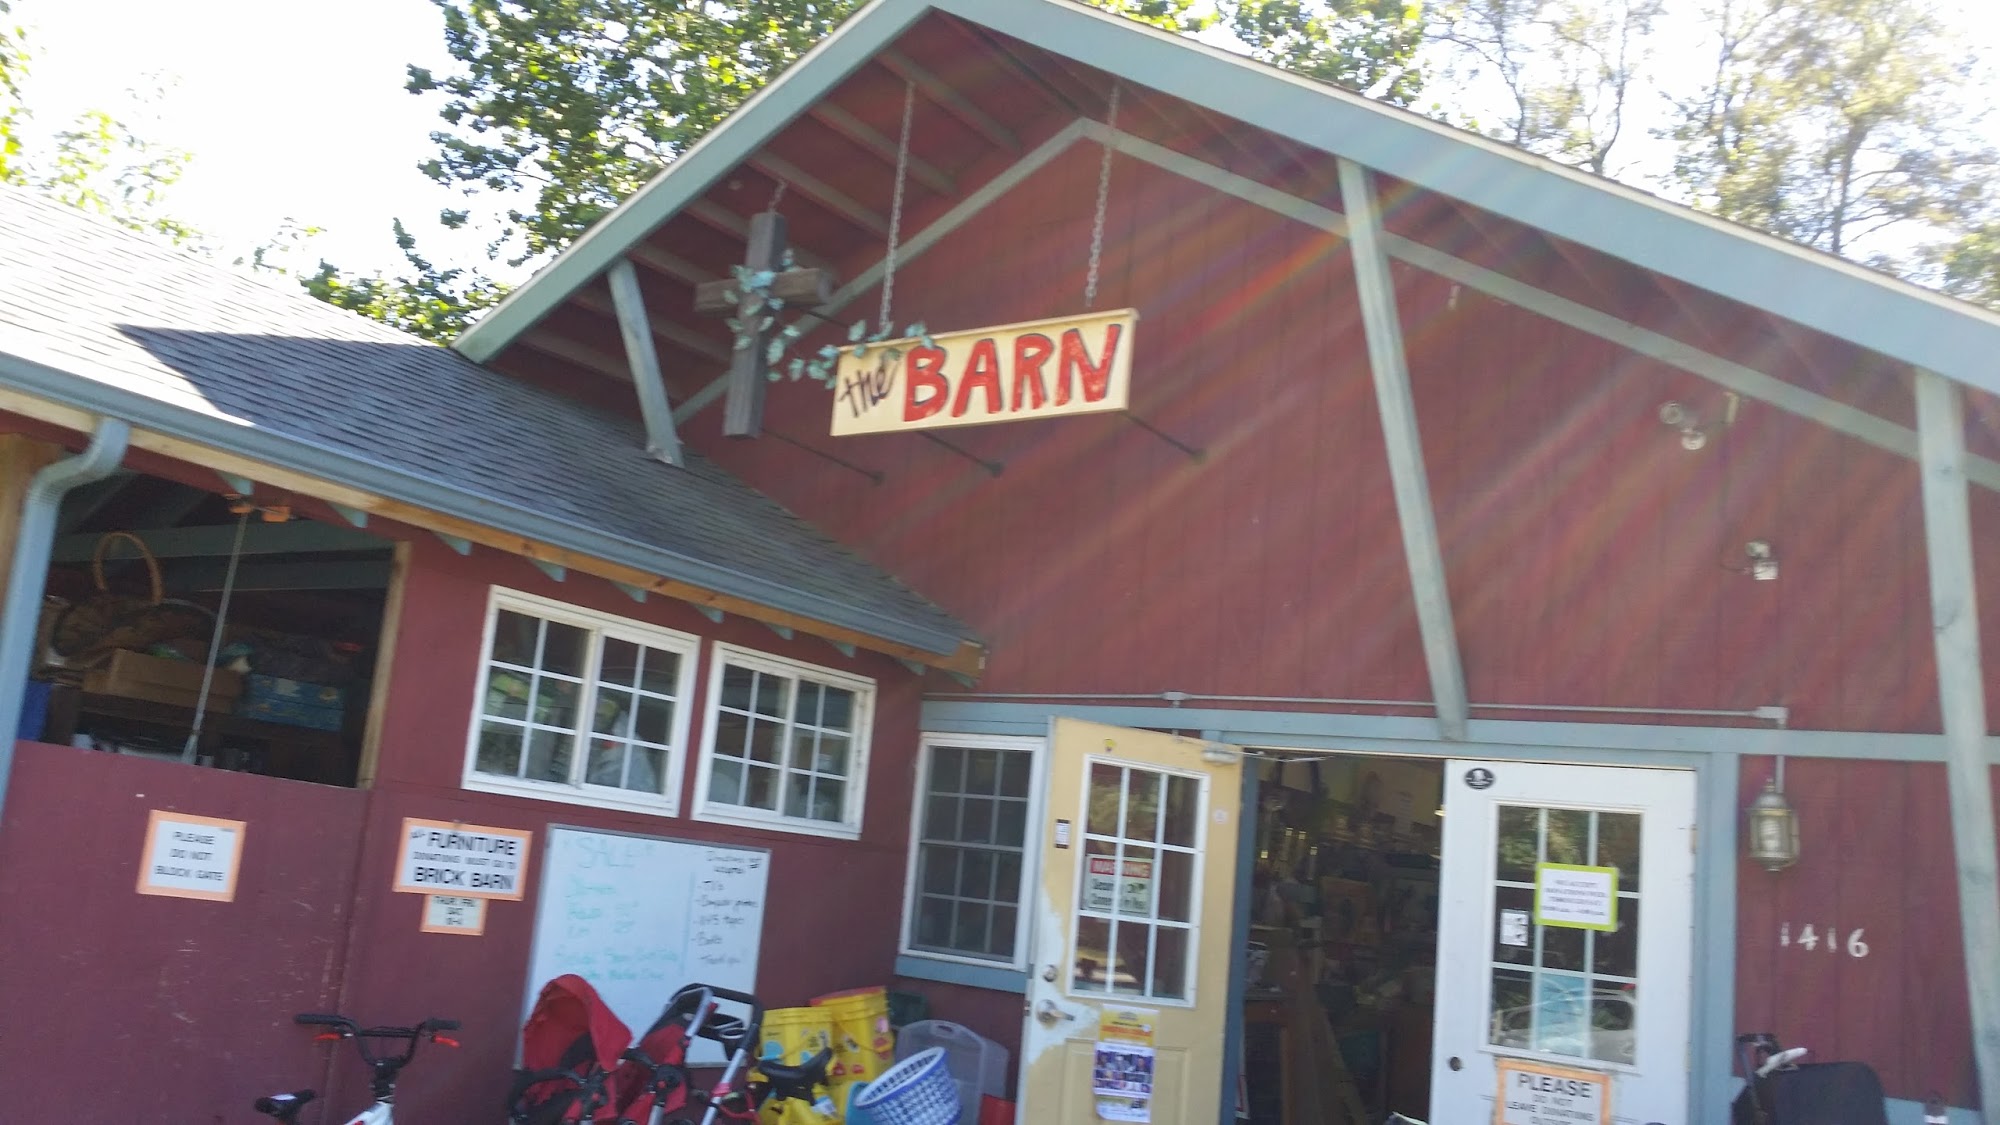 Barn Thrift Shop, The